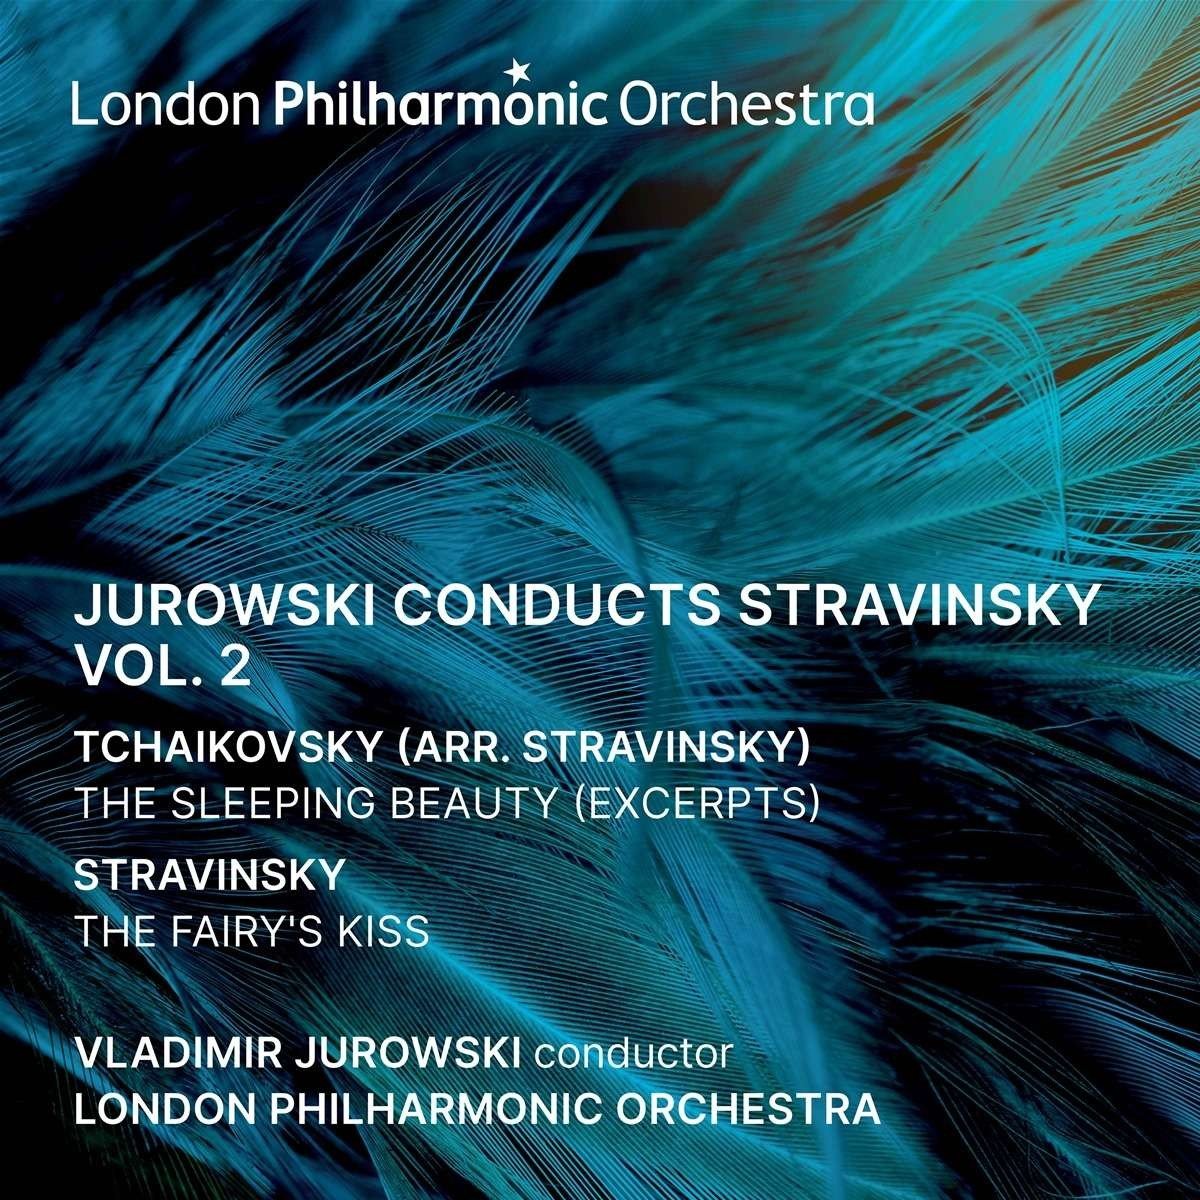 StravinskyJuroskiLPOVol.2CD.jpg